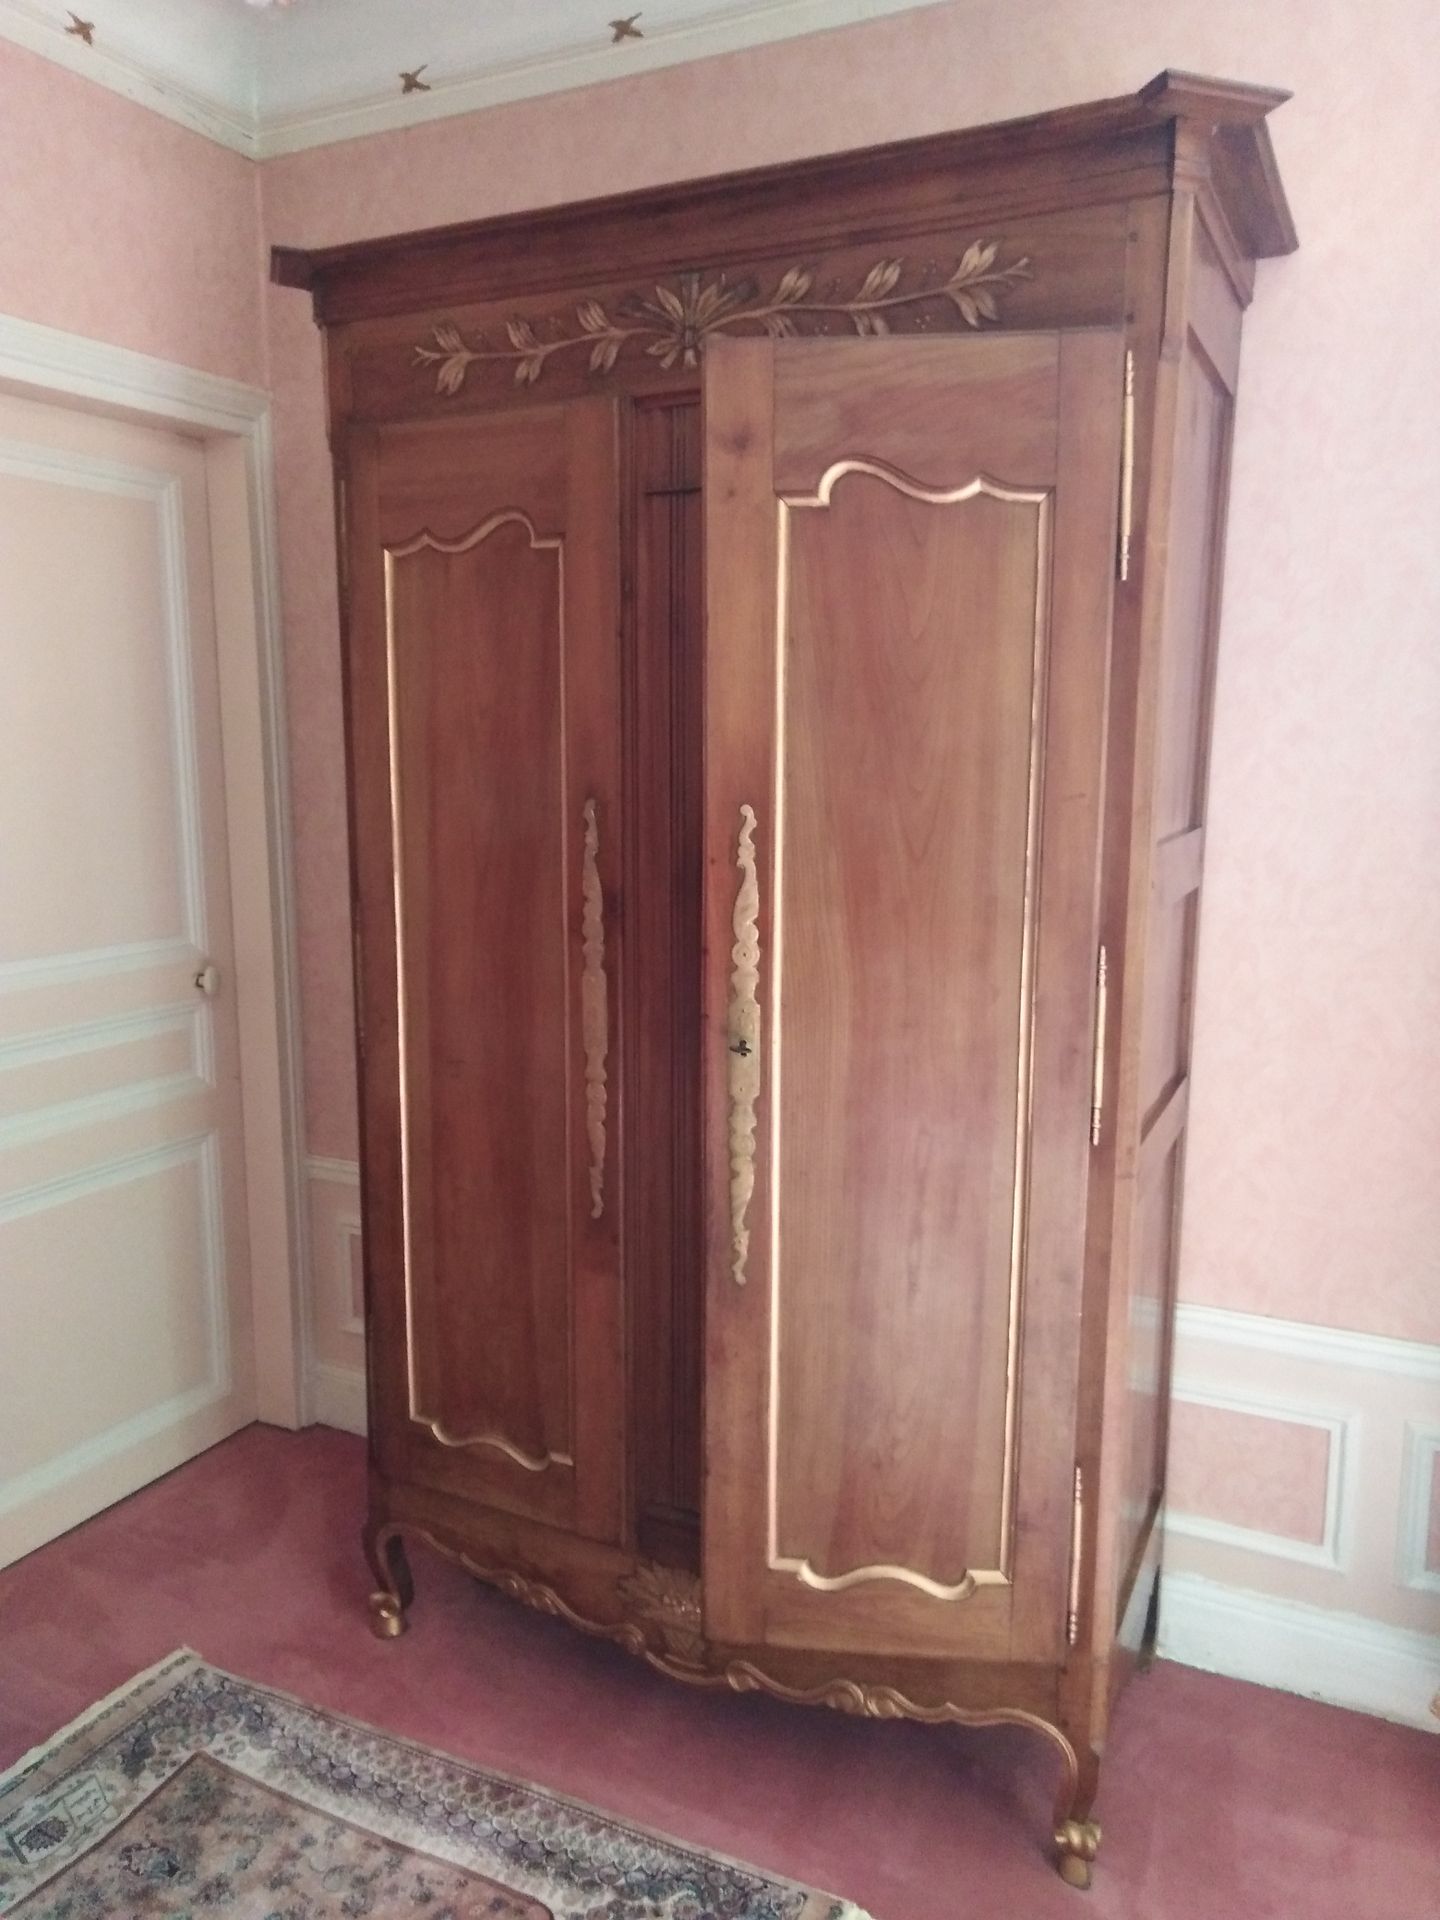 Null VENDÉENNE浅色木质双门衣柜

19世纪

217 x 132 x 63 cm

使用和维护的条件